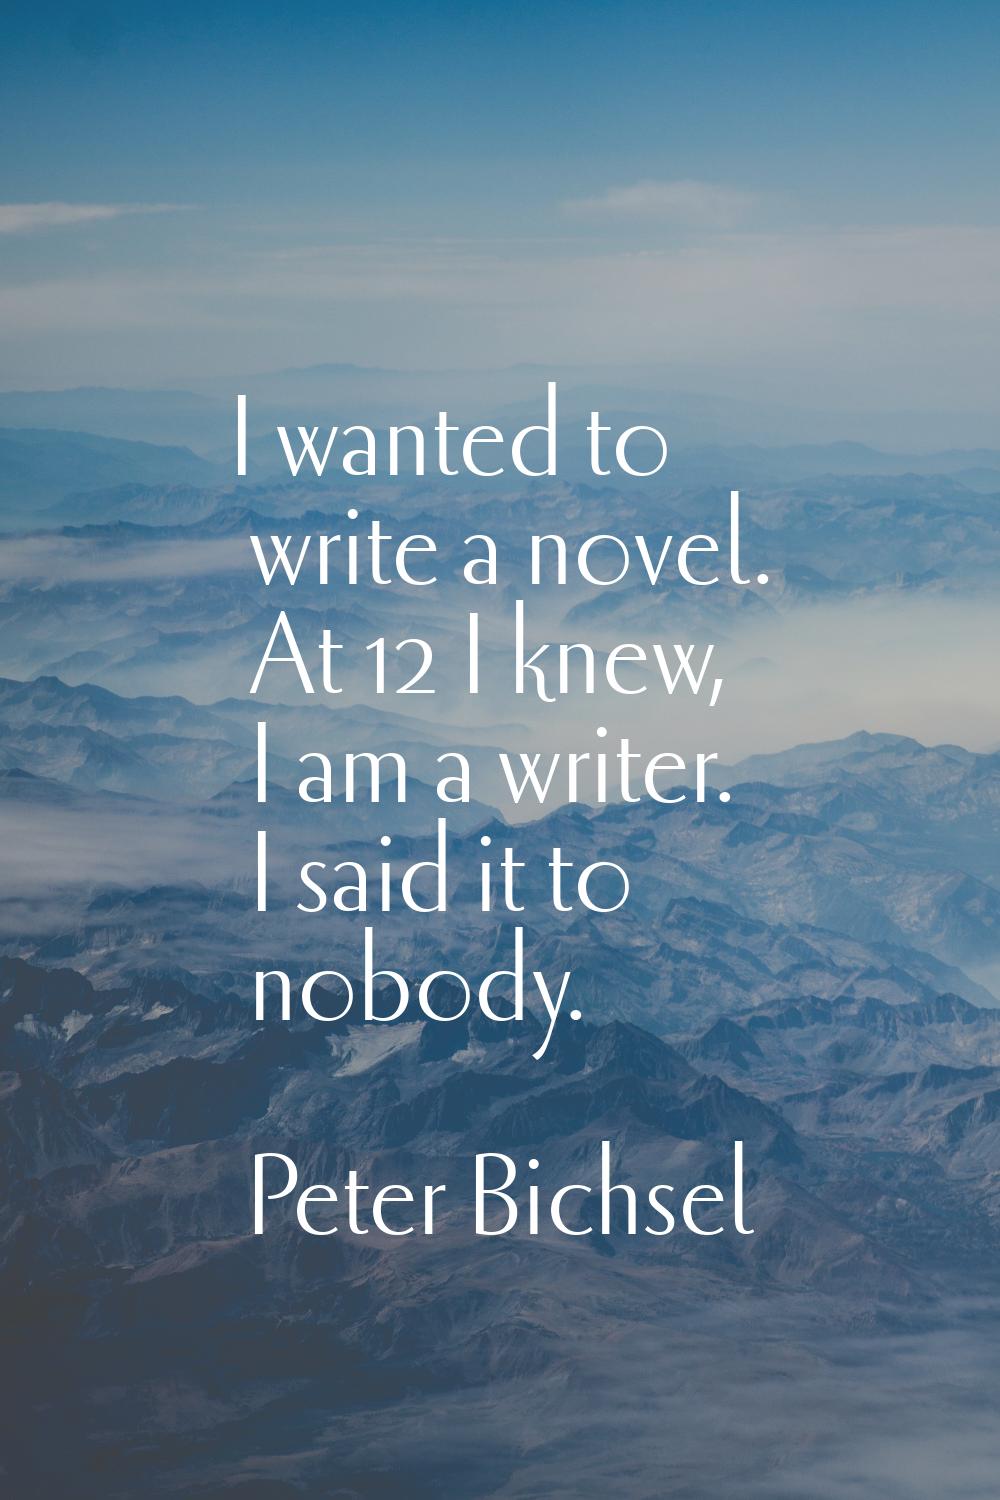 I wanted to write a novel. At 12 I knew, I am a writer. I said it to nobody.